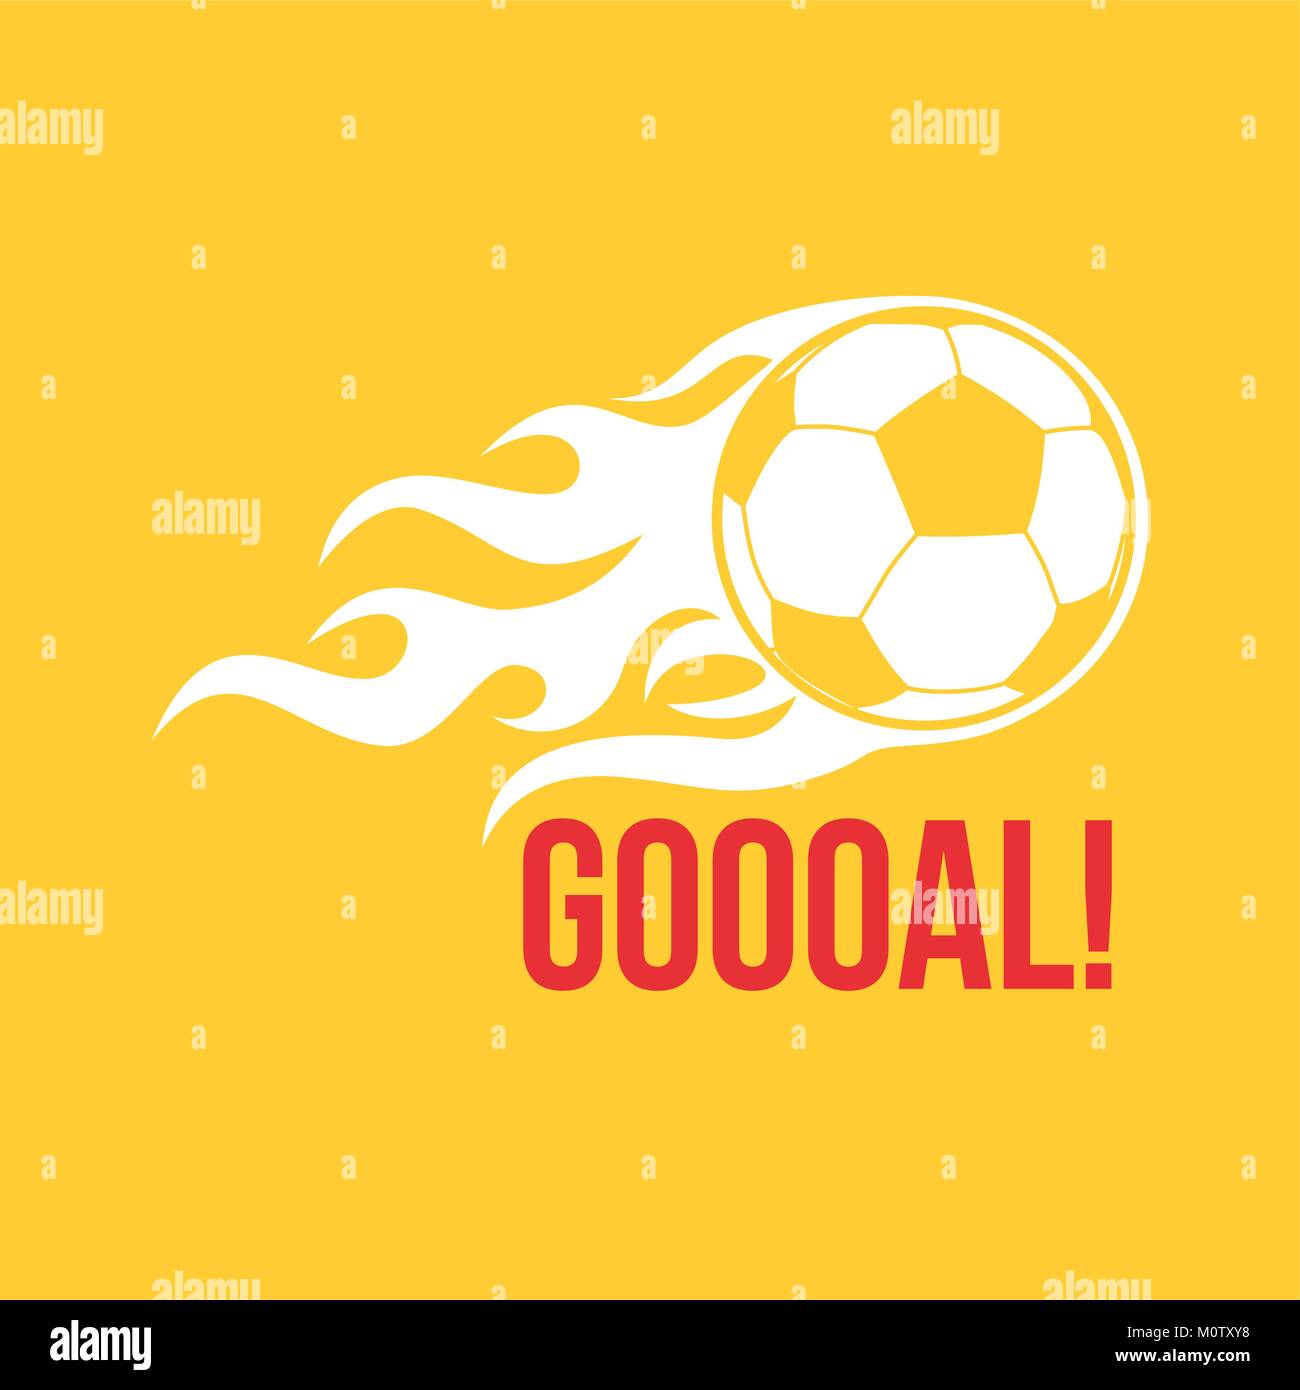 Football logo Stock Vector Images - Alamy